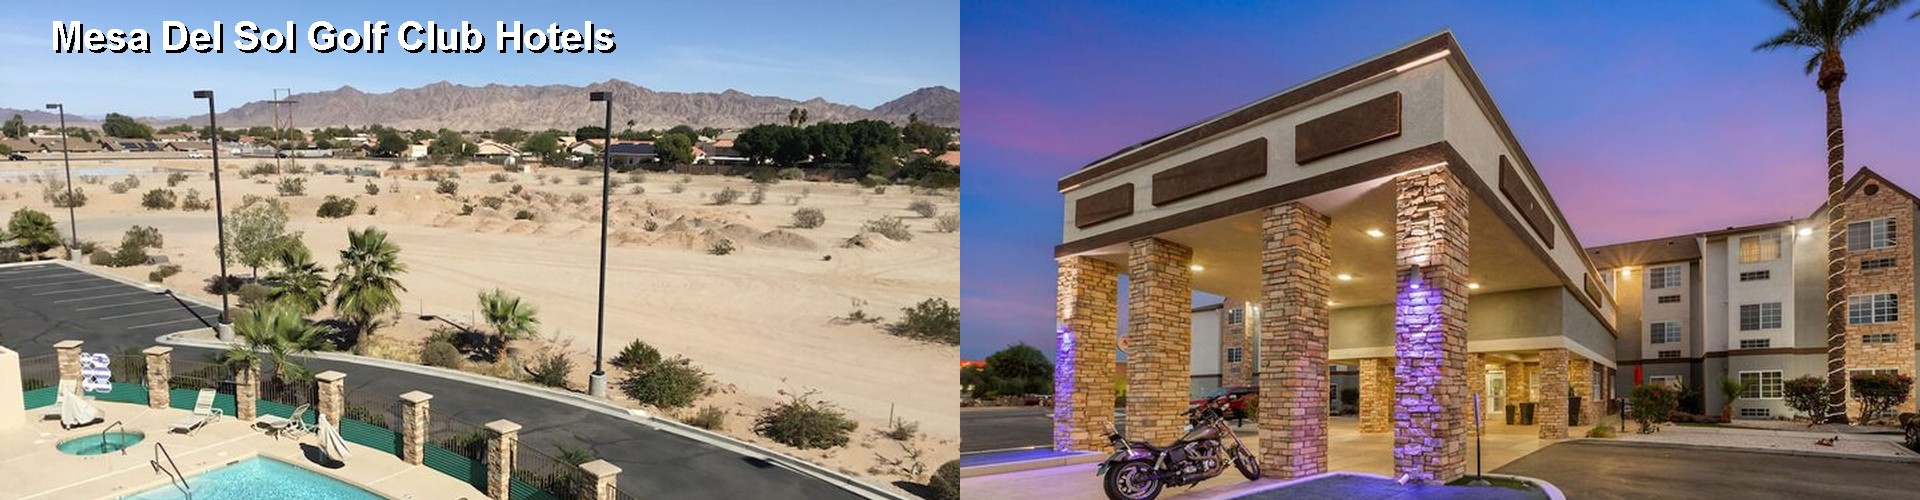 5 Best Hotels near Mesa Del Sol Golf Club